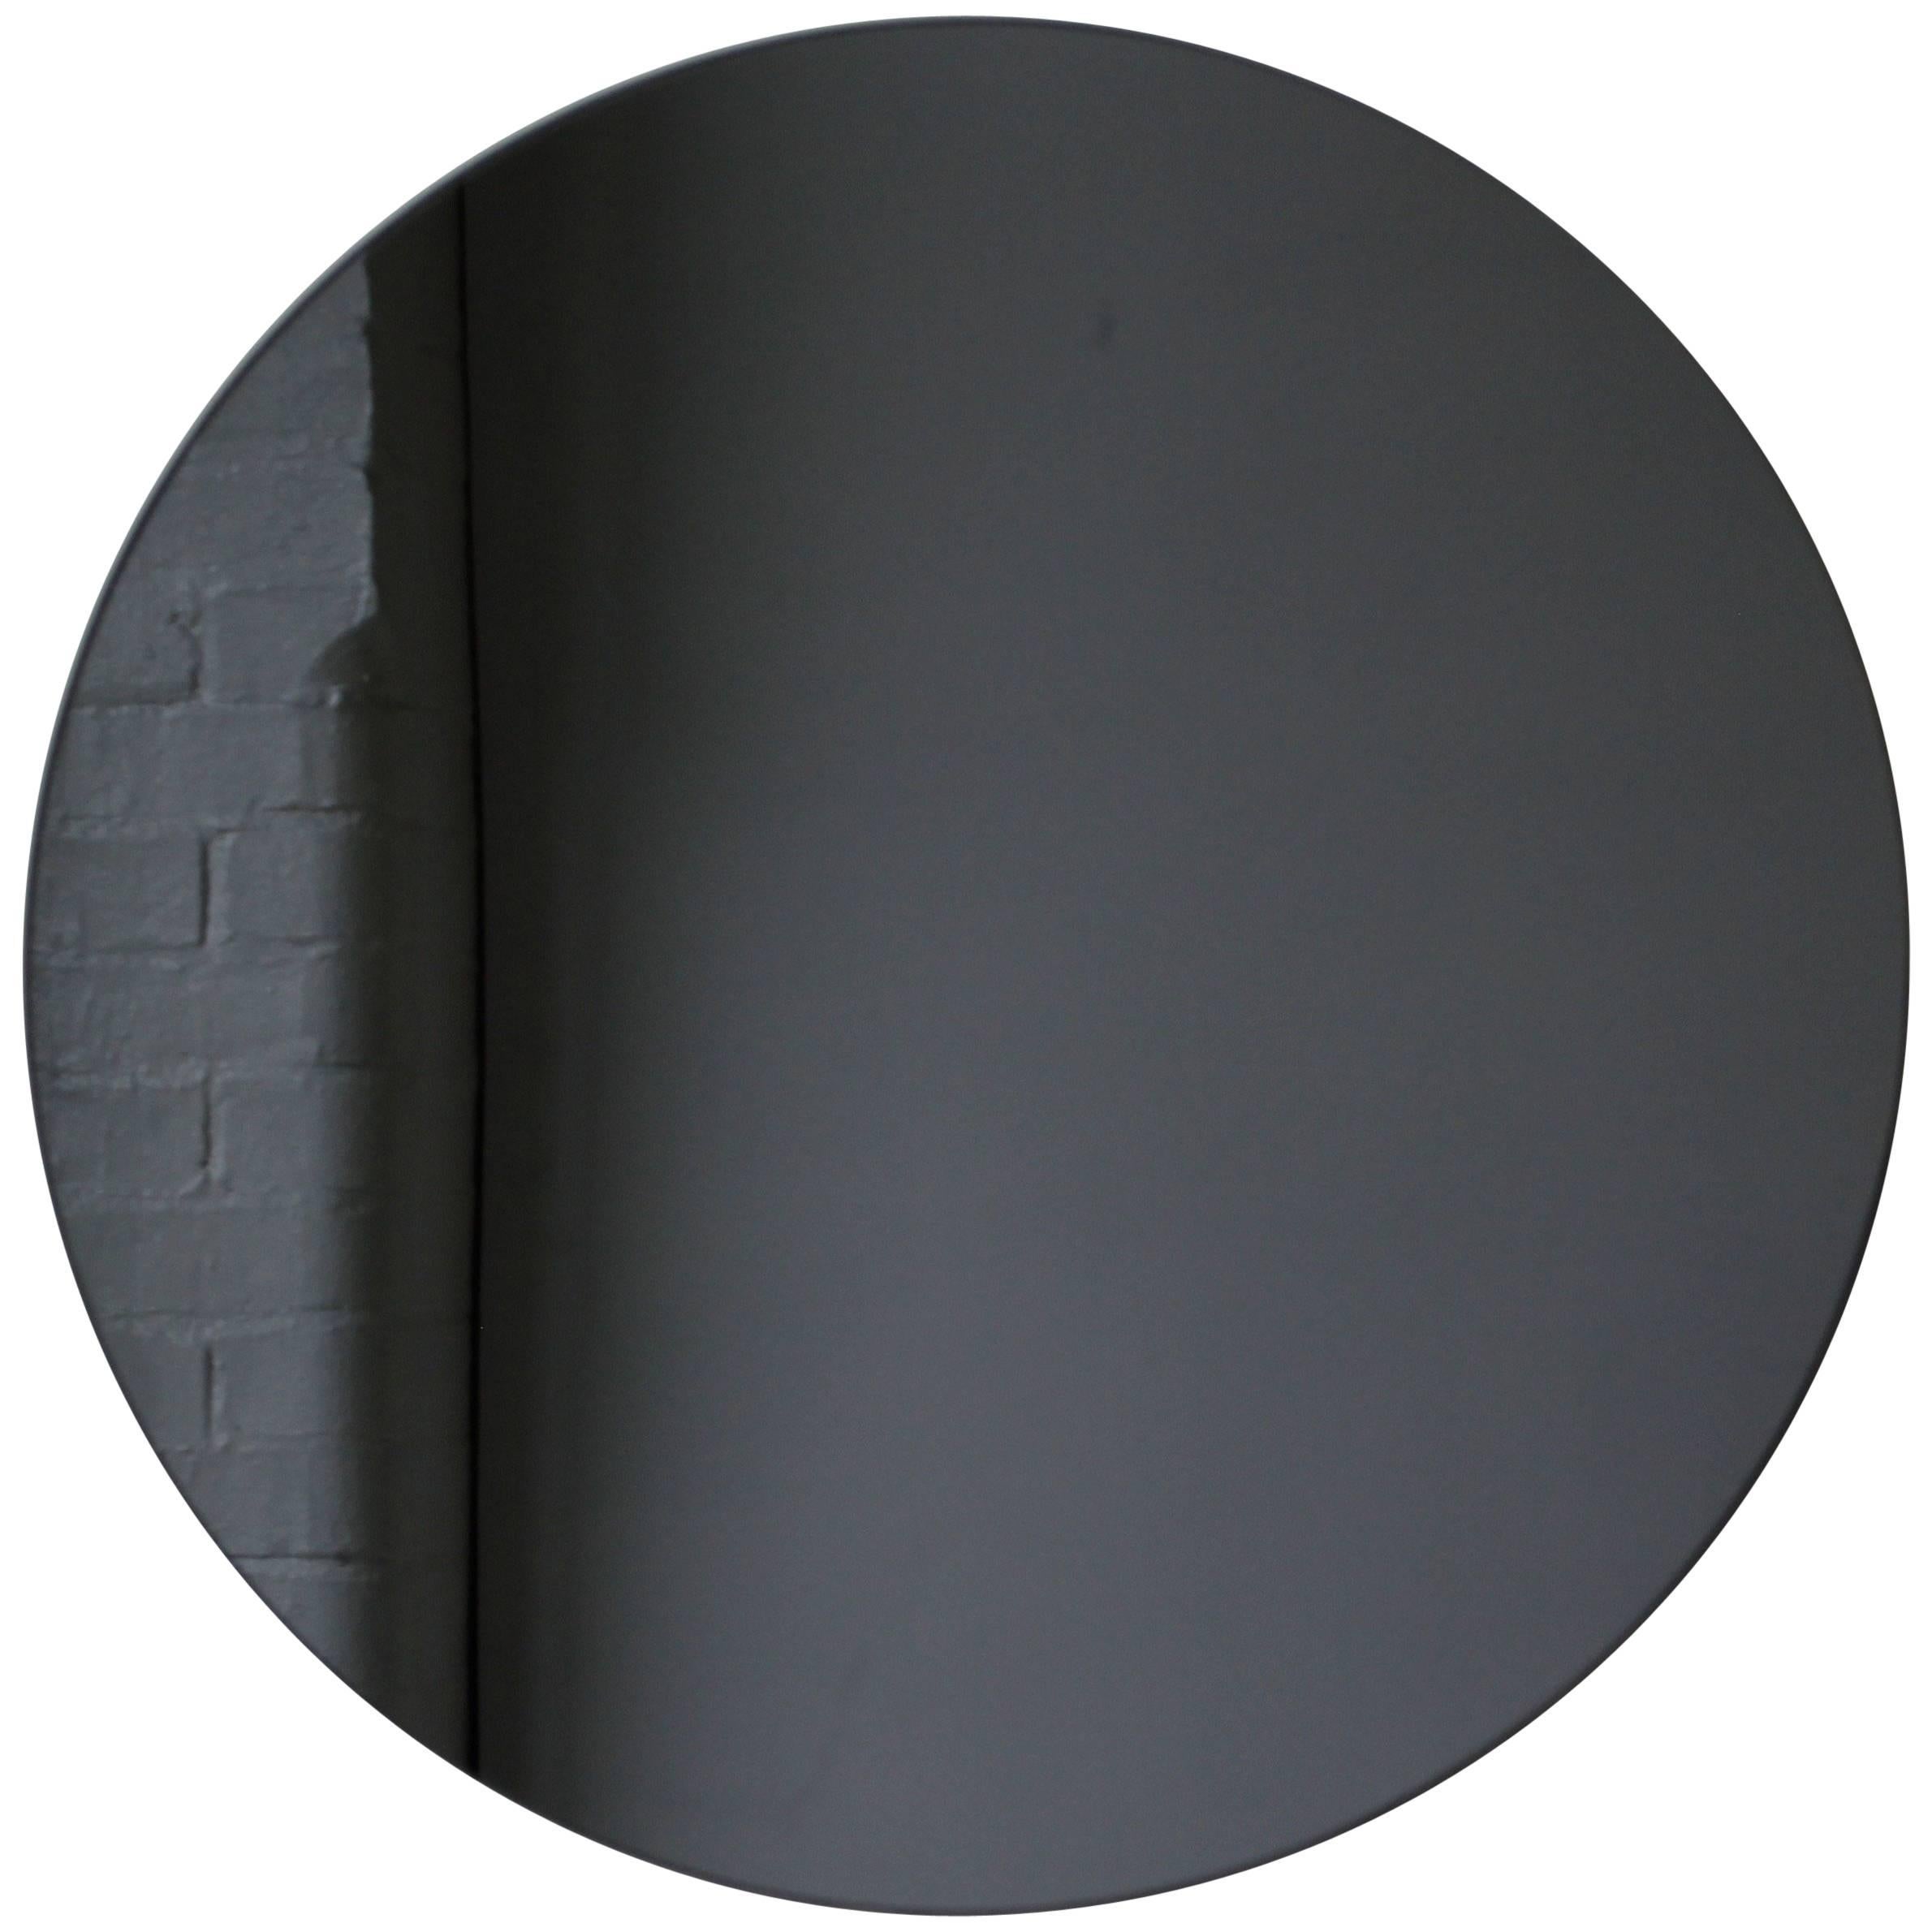 Orbis Black Tinted Round Frameless Modern Mirror with Floating Effect, Medium